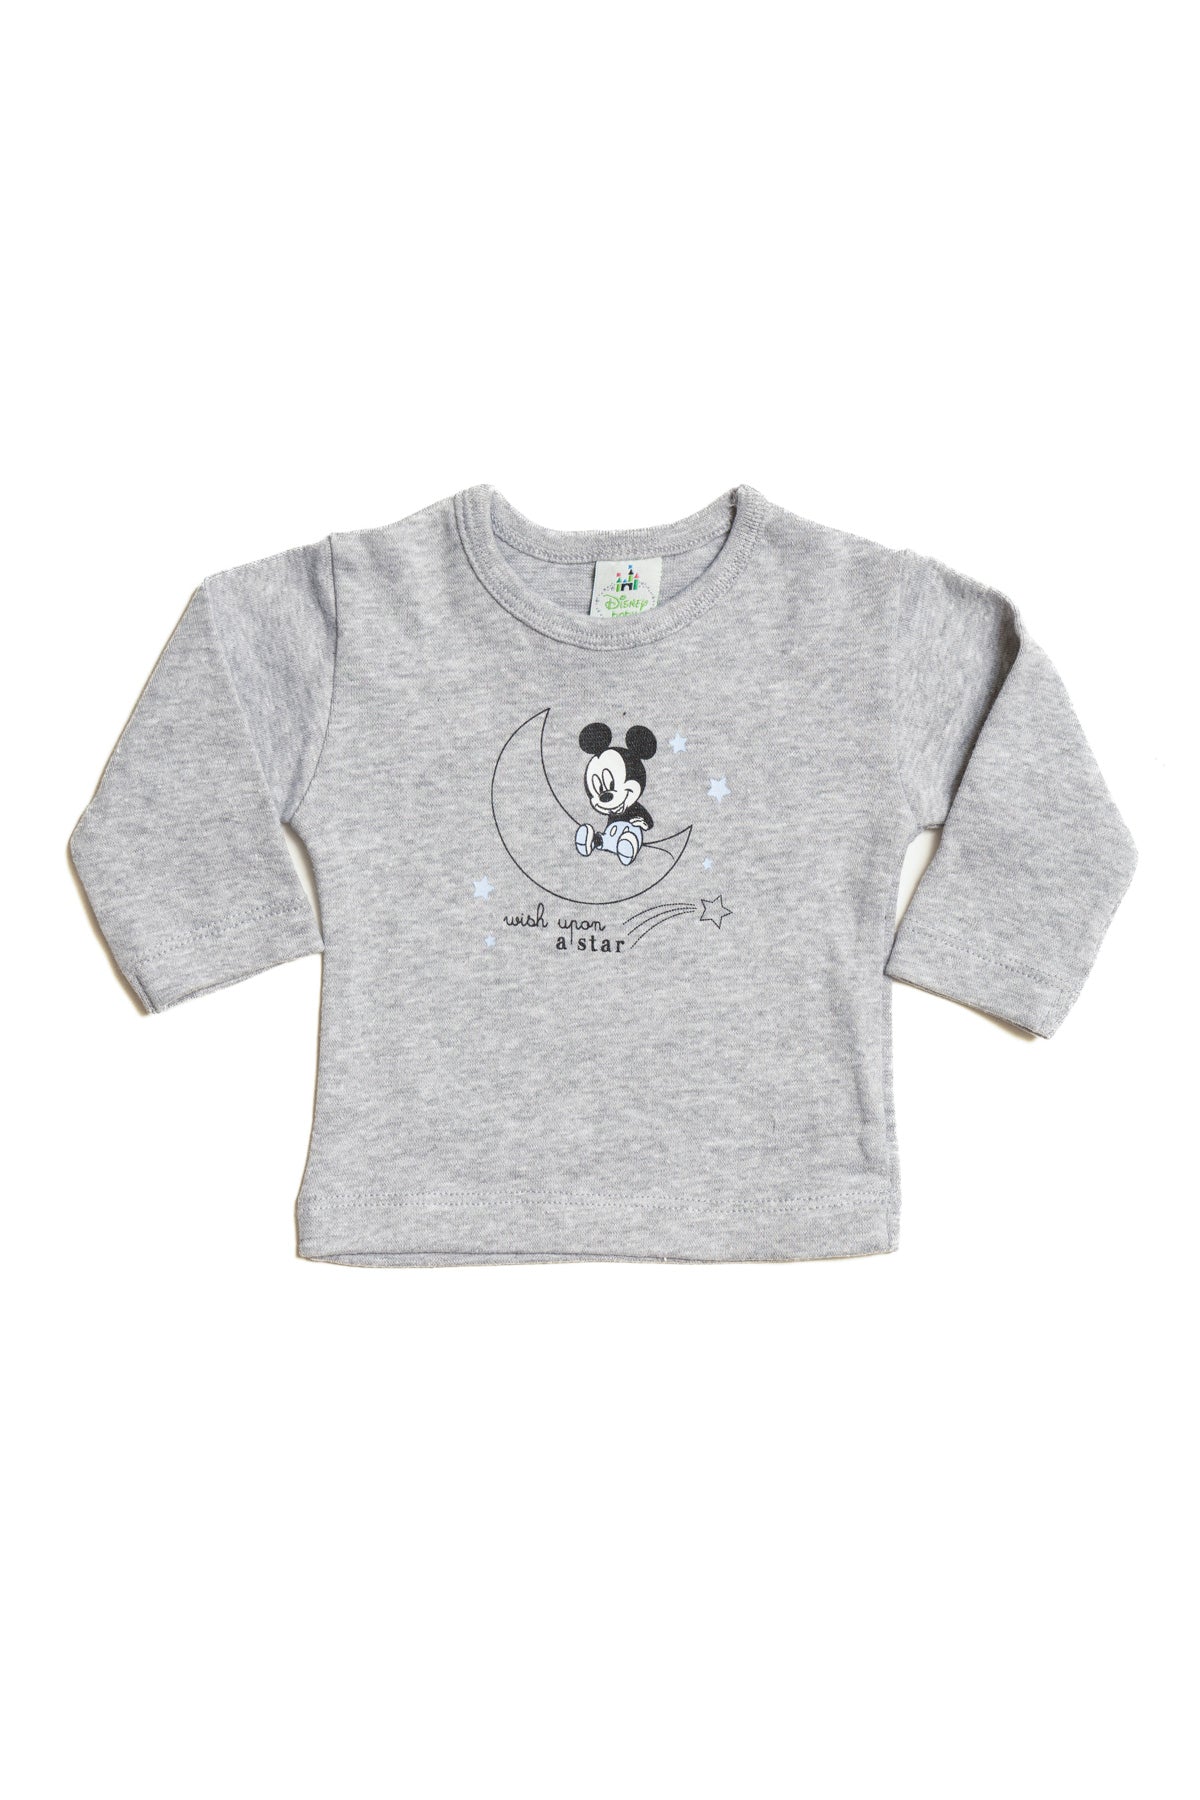 T-Shirt Baby Mickey " Star" sleeve 4046